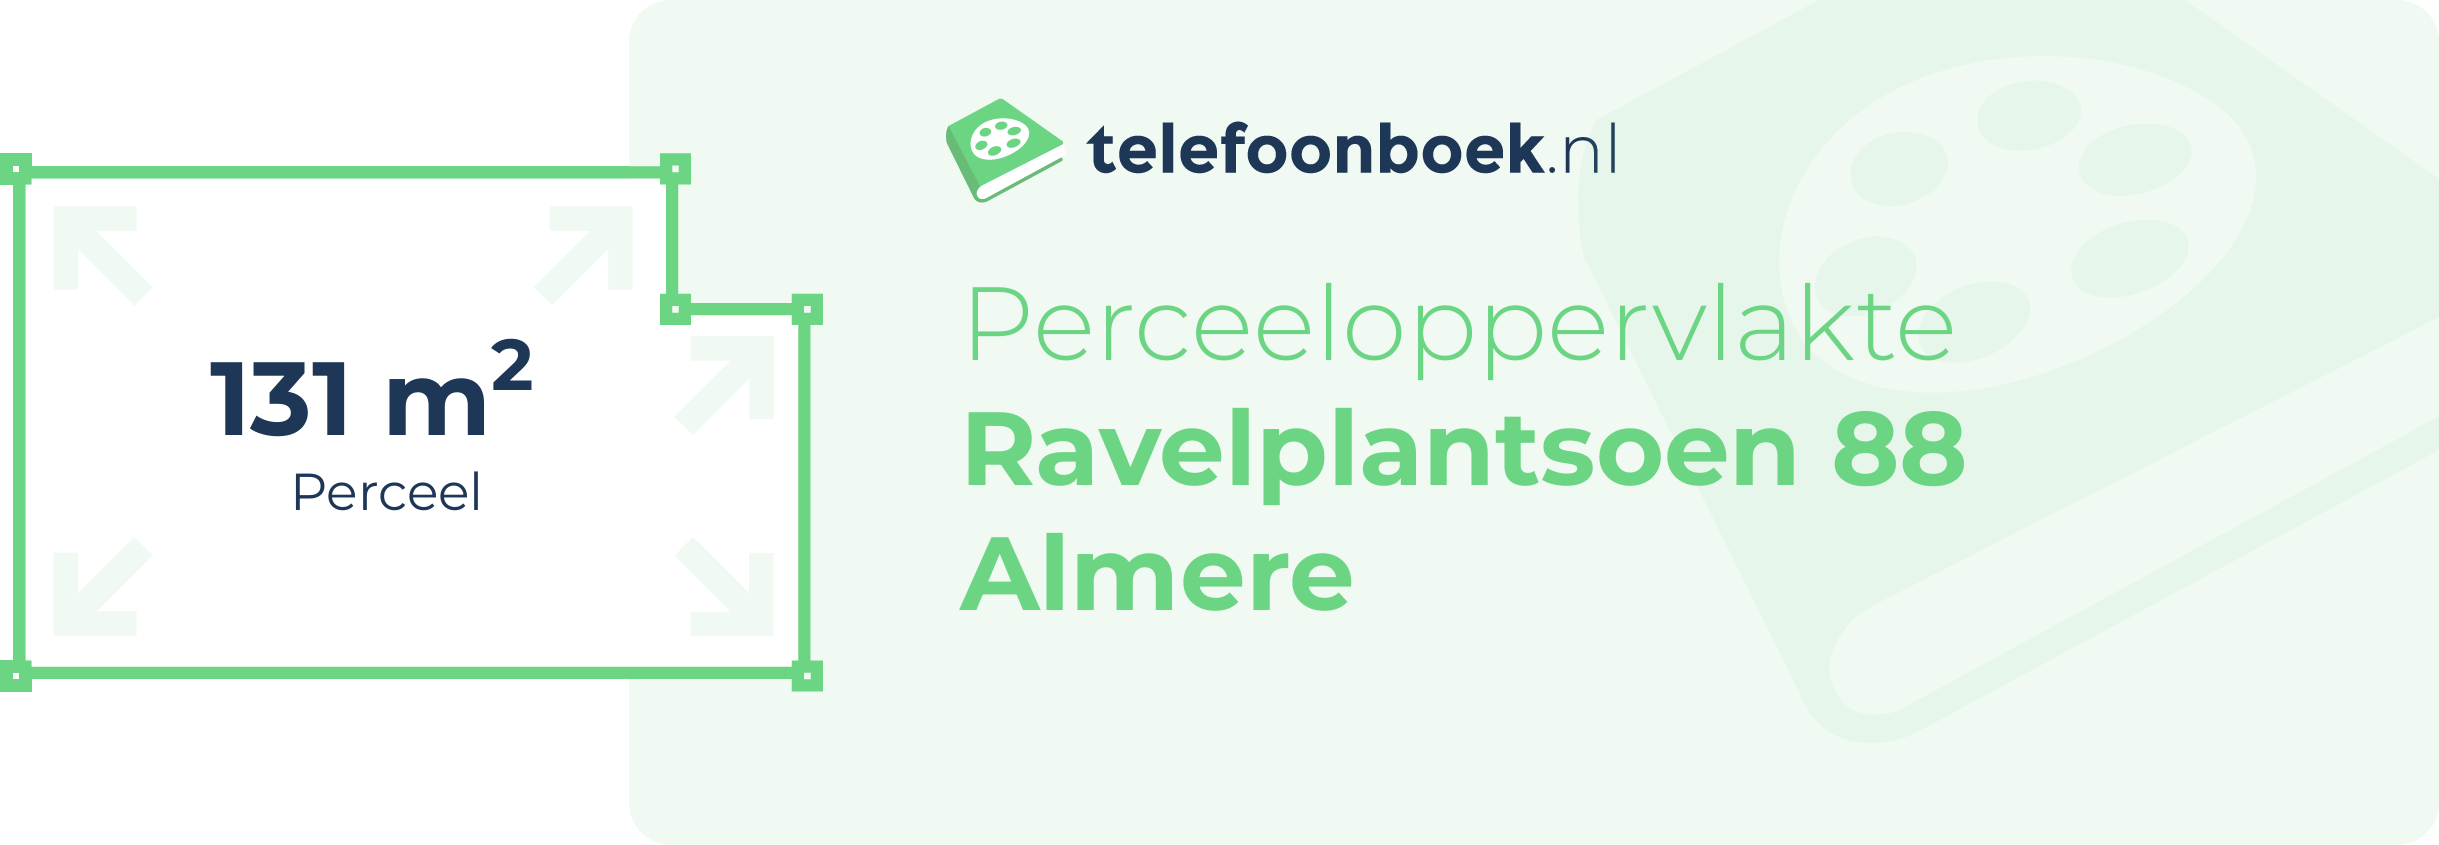 Perceeloppervlakte Ravelplantsoen 88 Almere